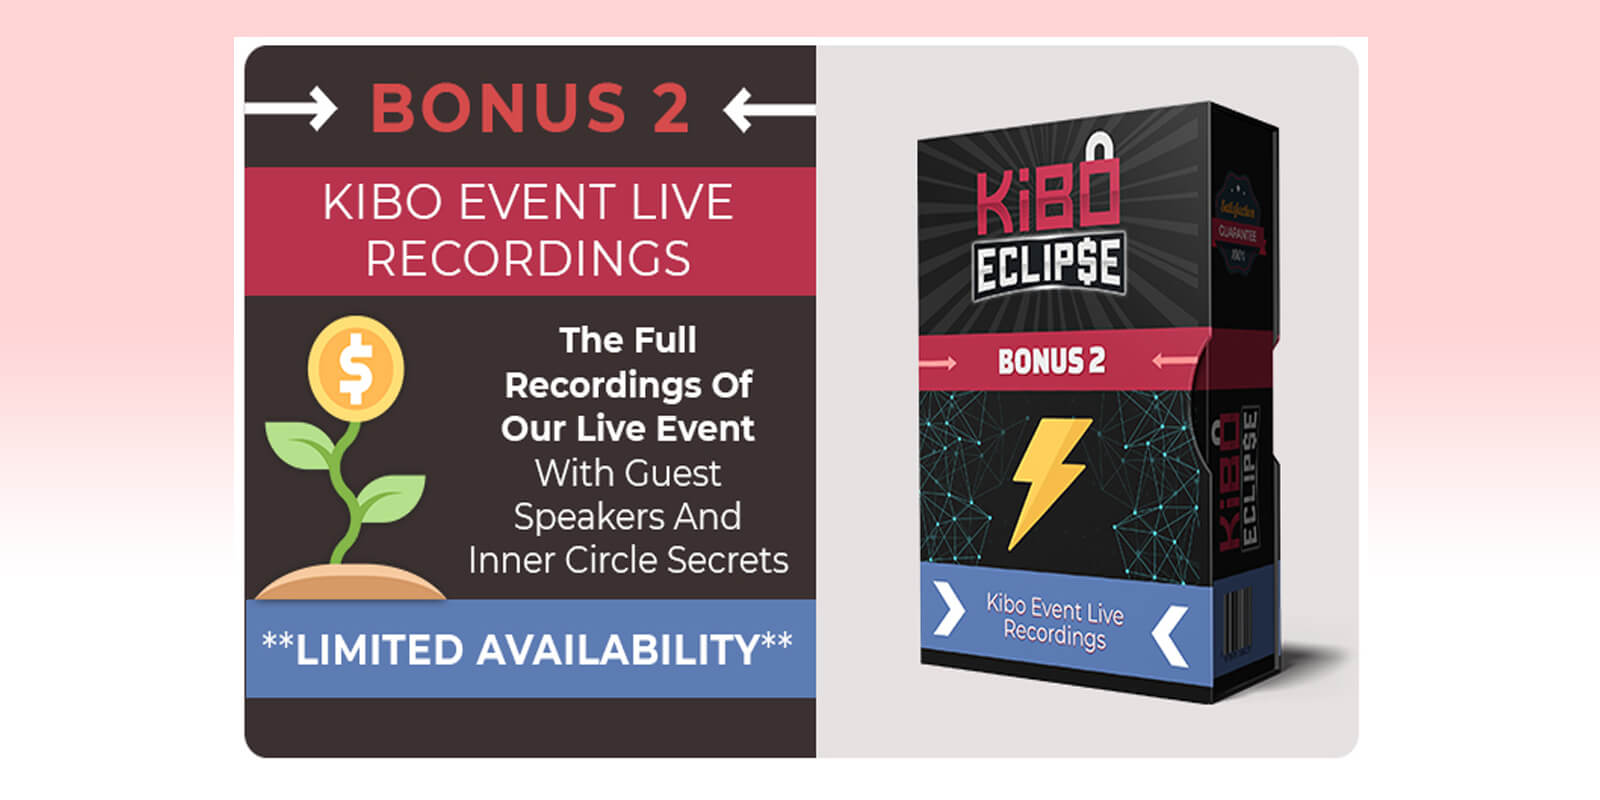 #Bonus 2: Kibo Event Live Recordings